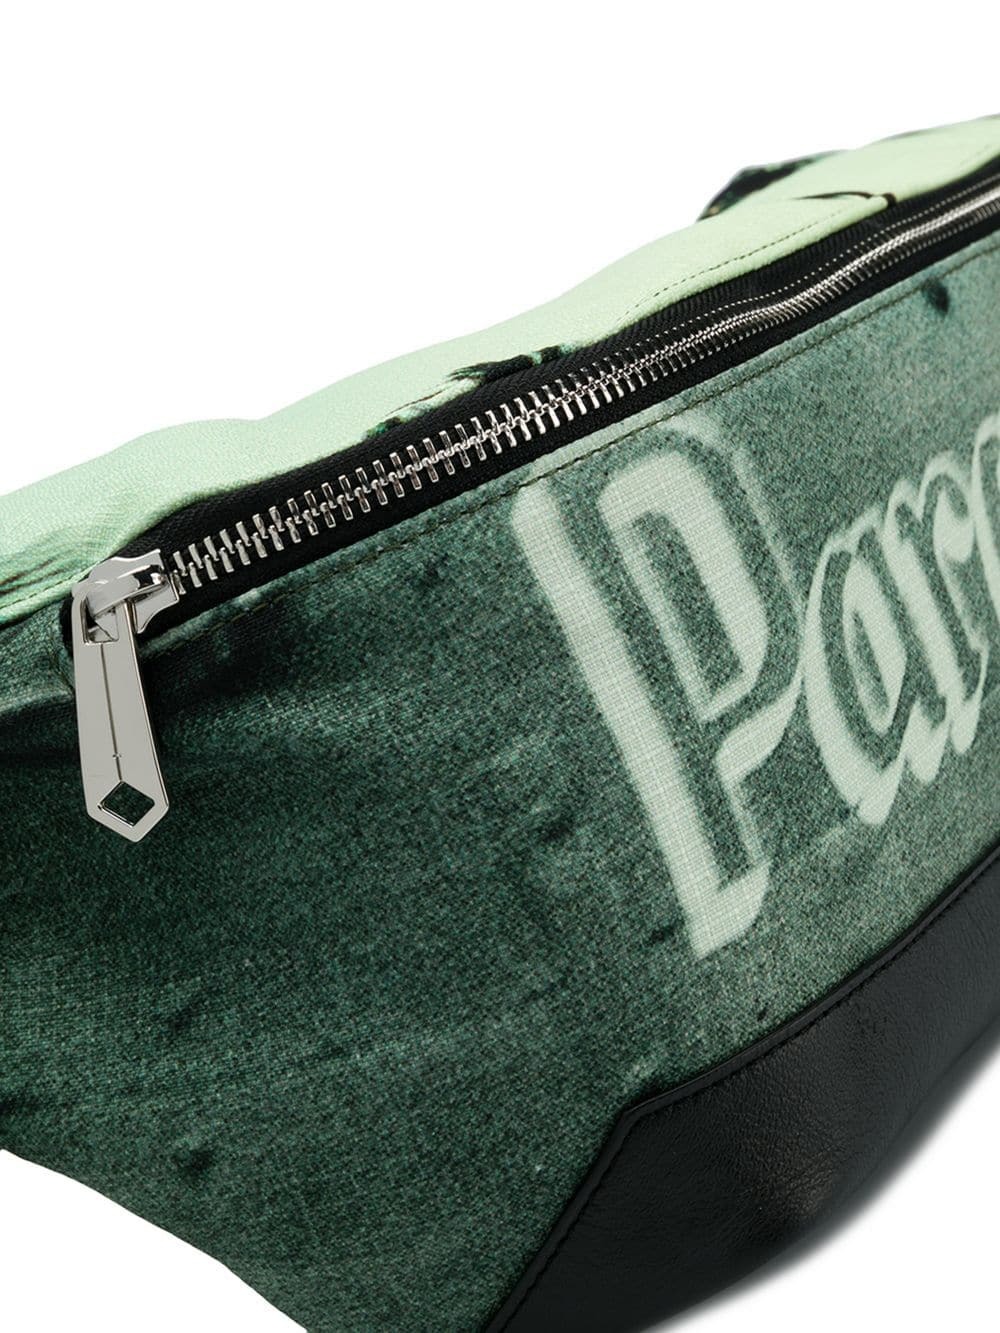 PS Paul Smith Paradise Belt Bag, $353, farfetch.com